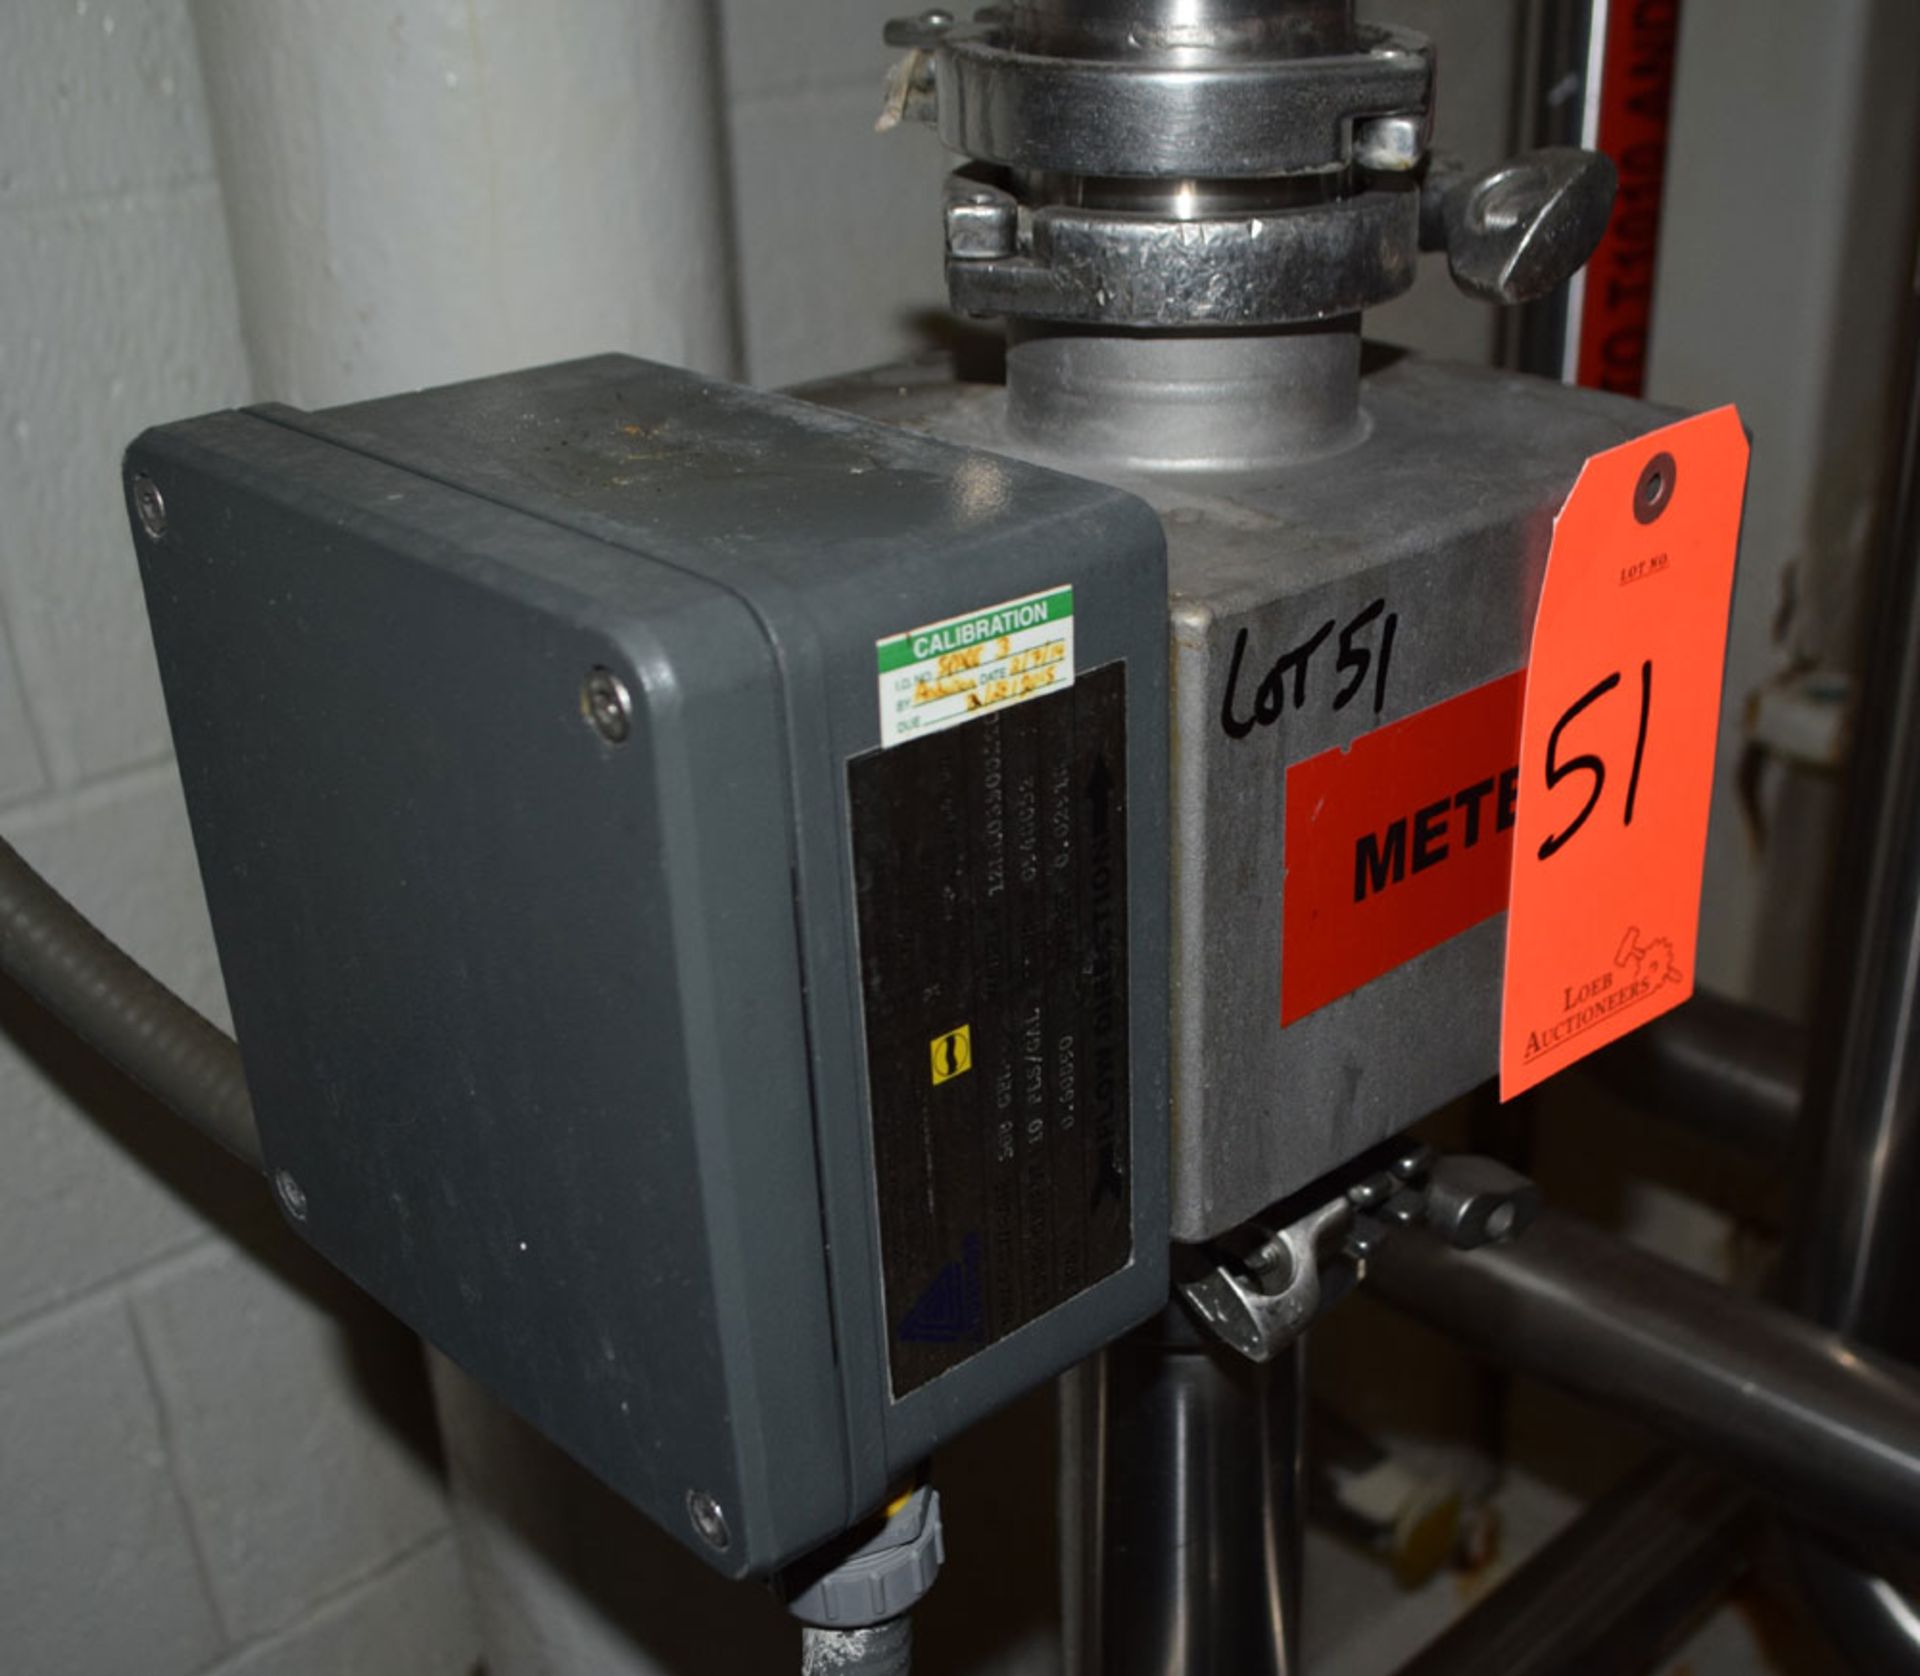 Anderson Instrument IZML06500110 Flow Meter Flow Rate 300 gpm; s/n: 0948052 - Location in Plant: